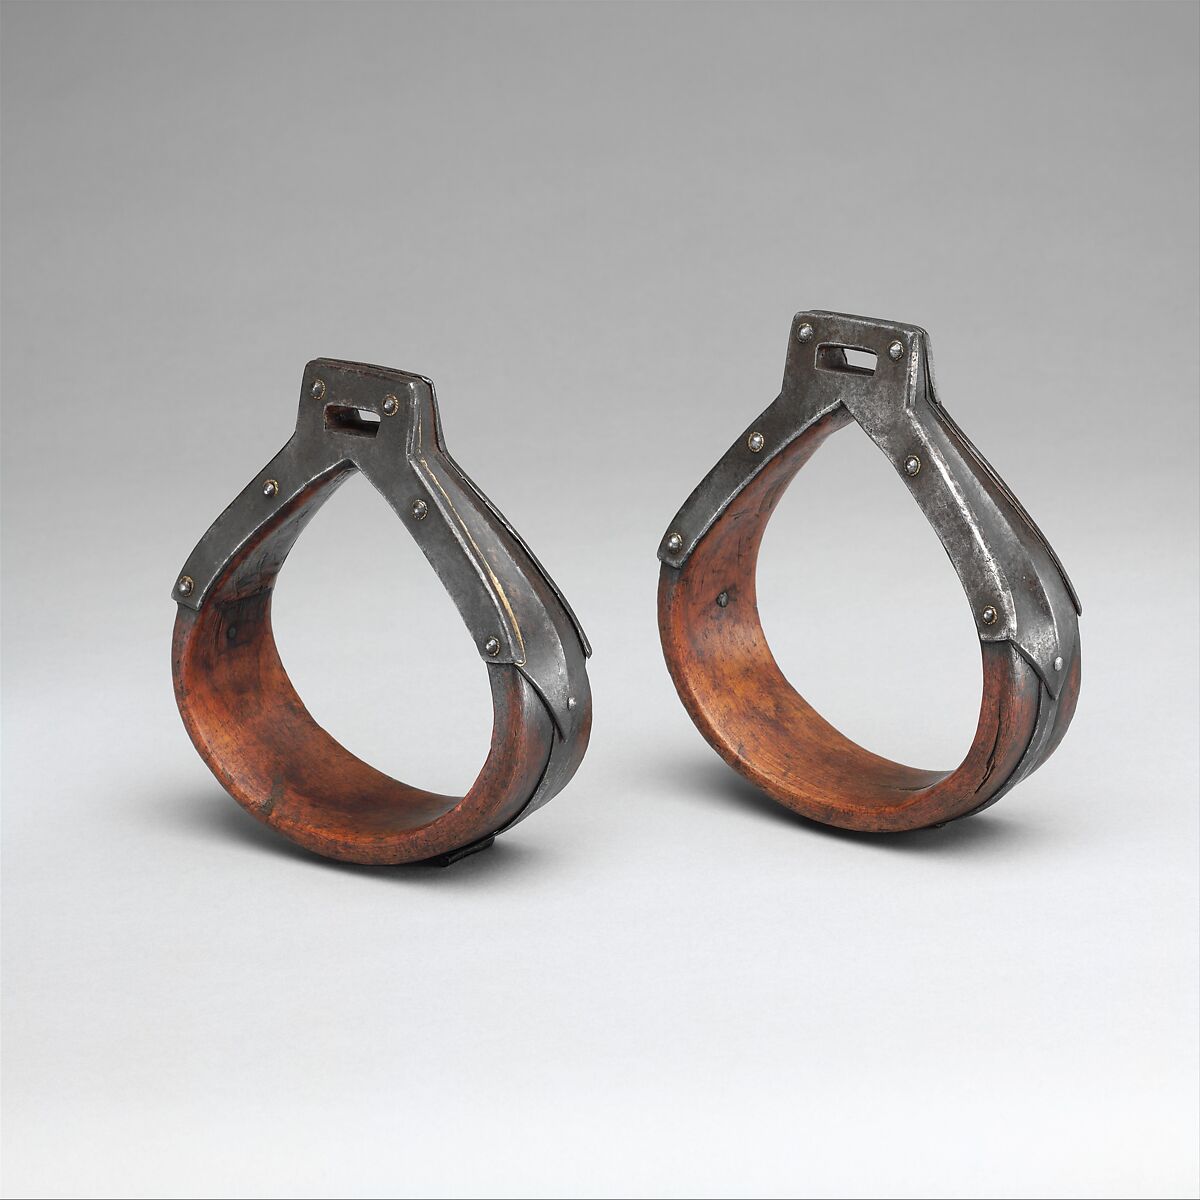 Pair of Stirrups, Wood, iron, copper alloy, Tibetan or Mongolian 